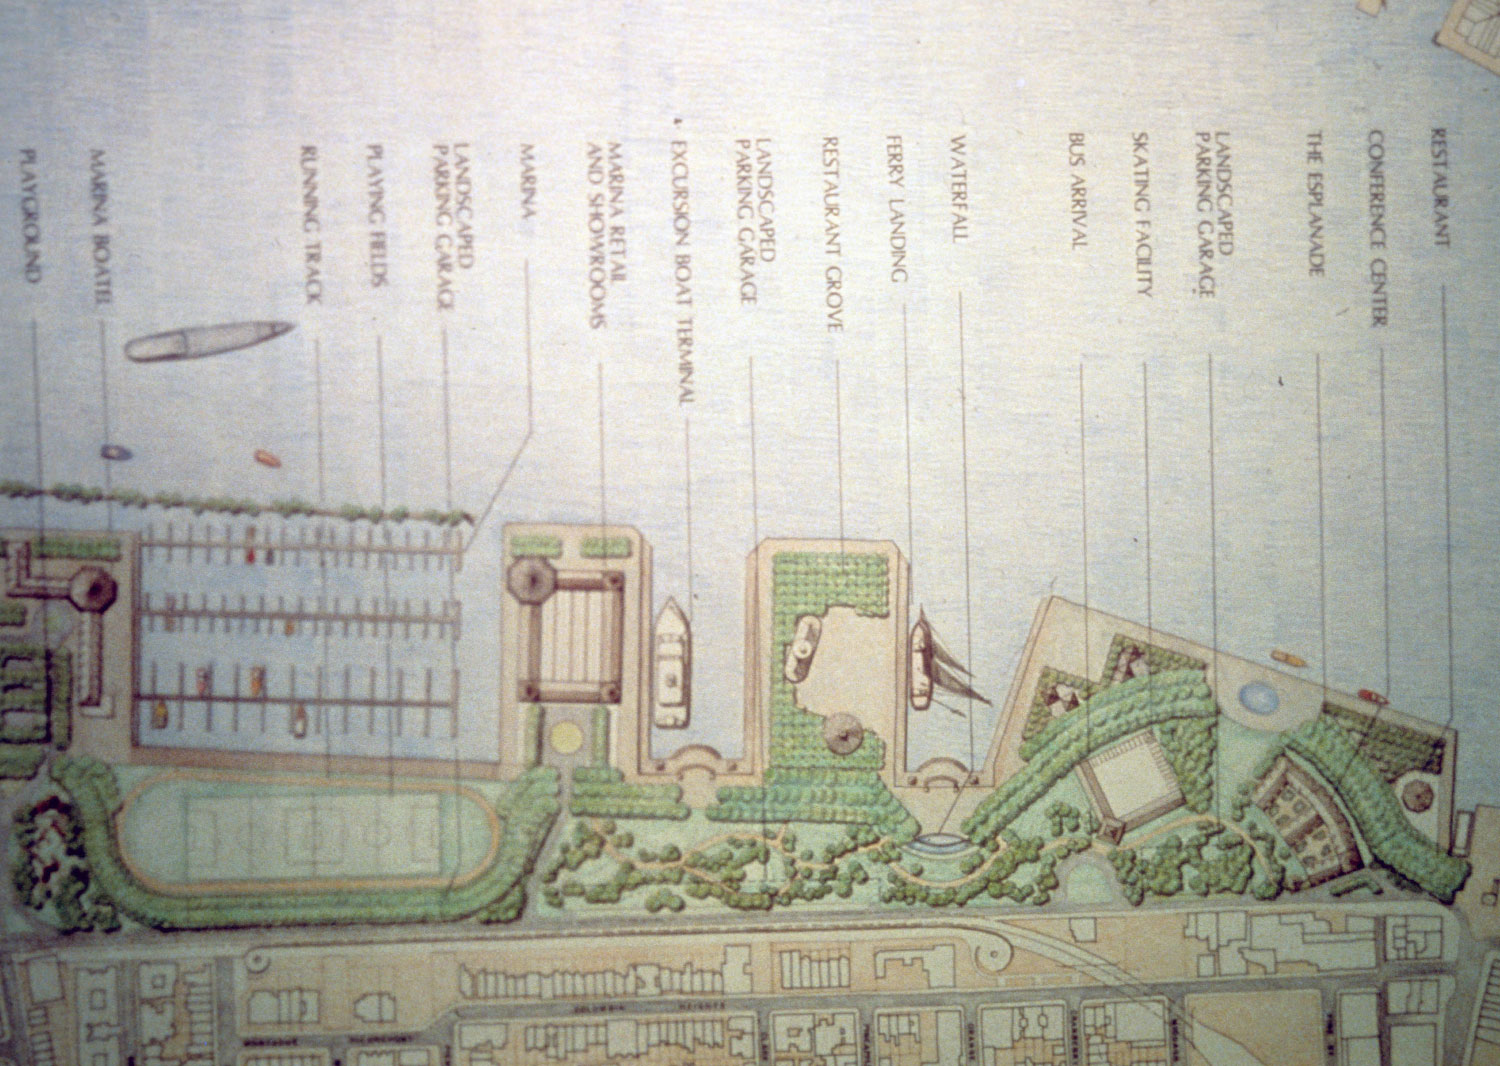 Original Brooklyn Piers 1 through 6 Plan 1994